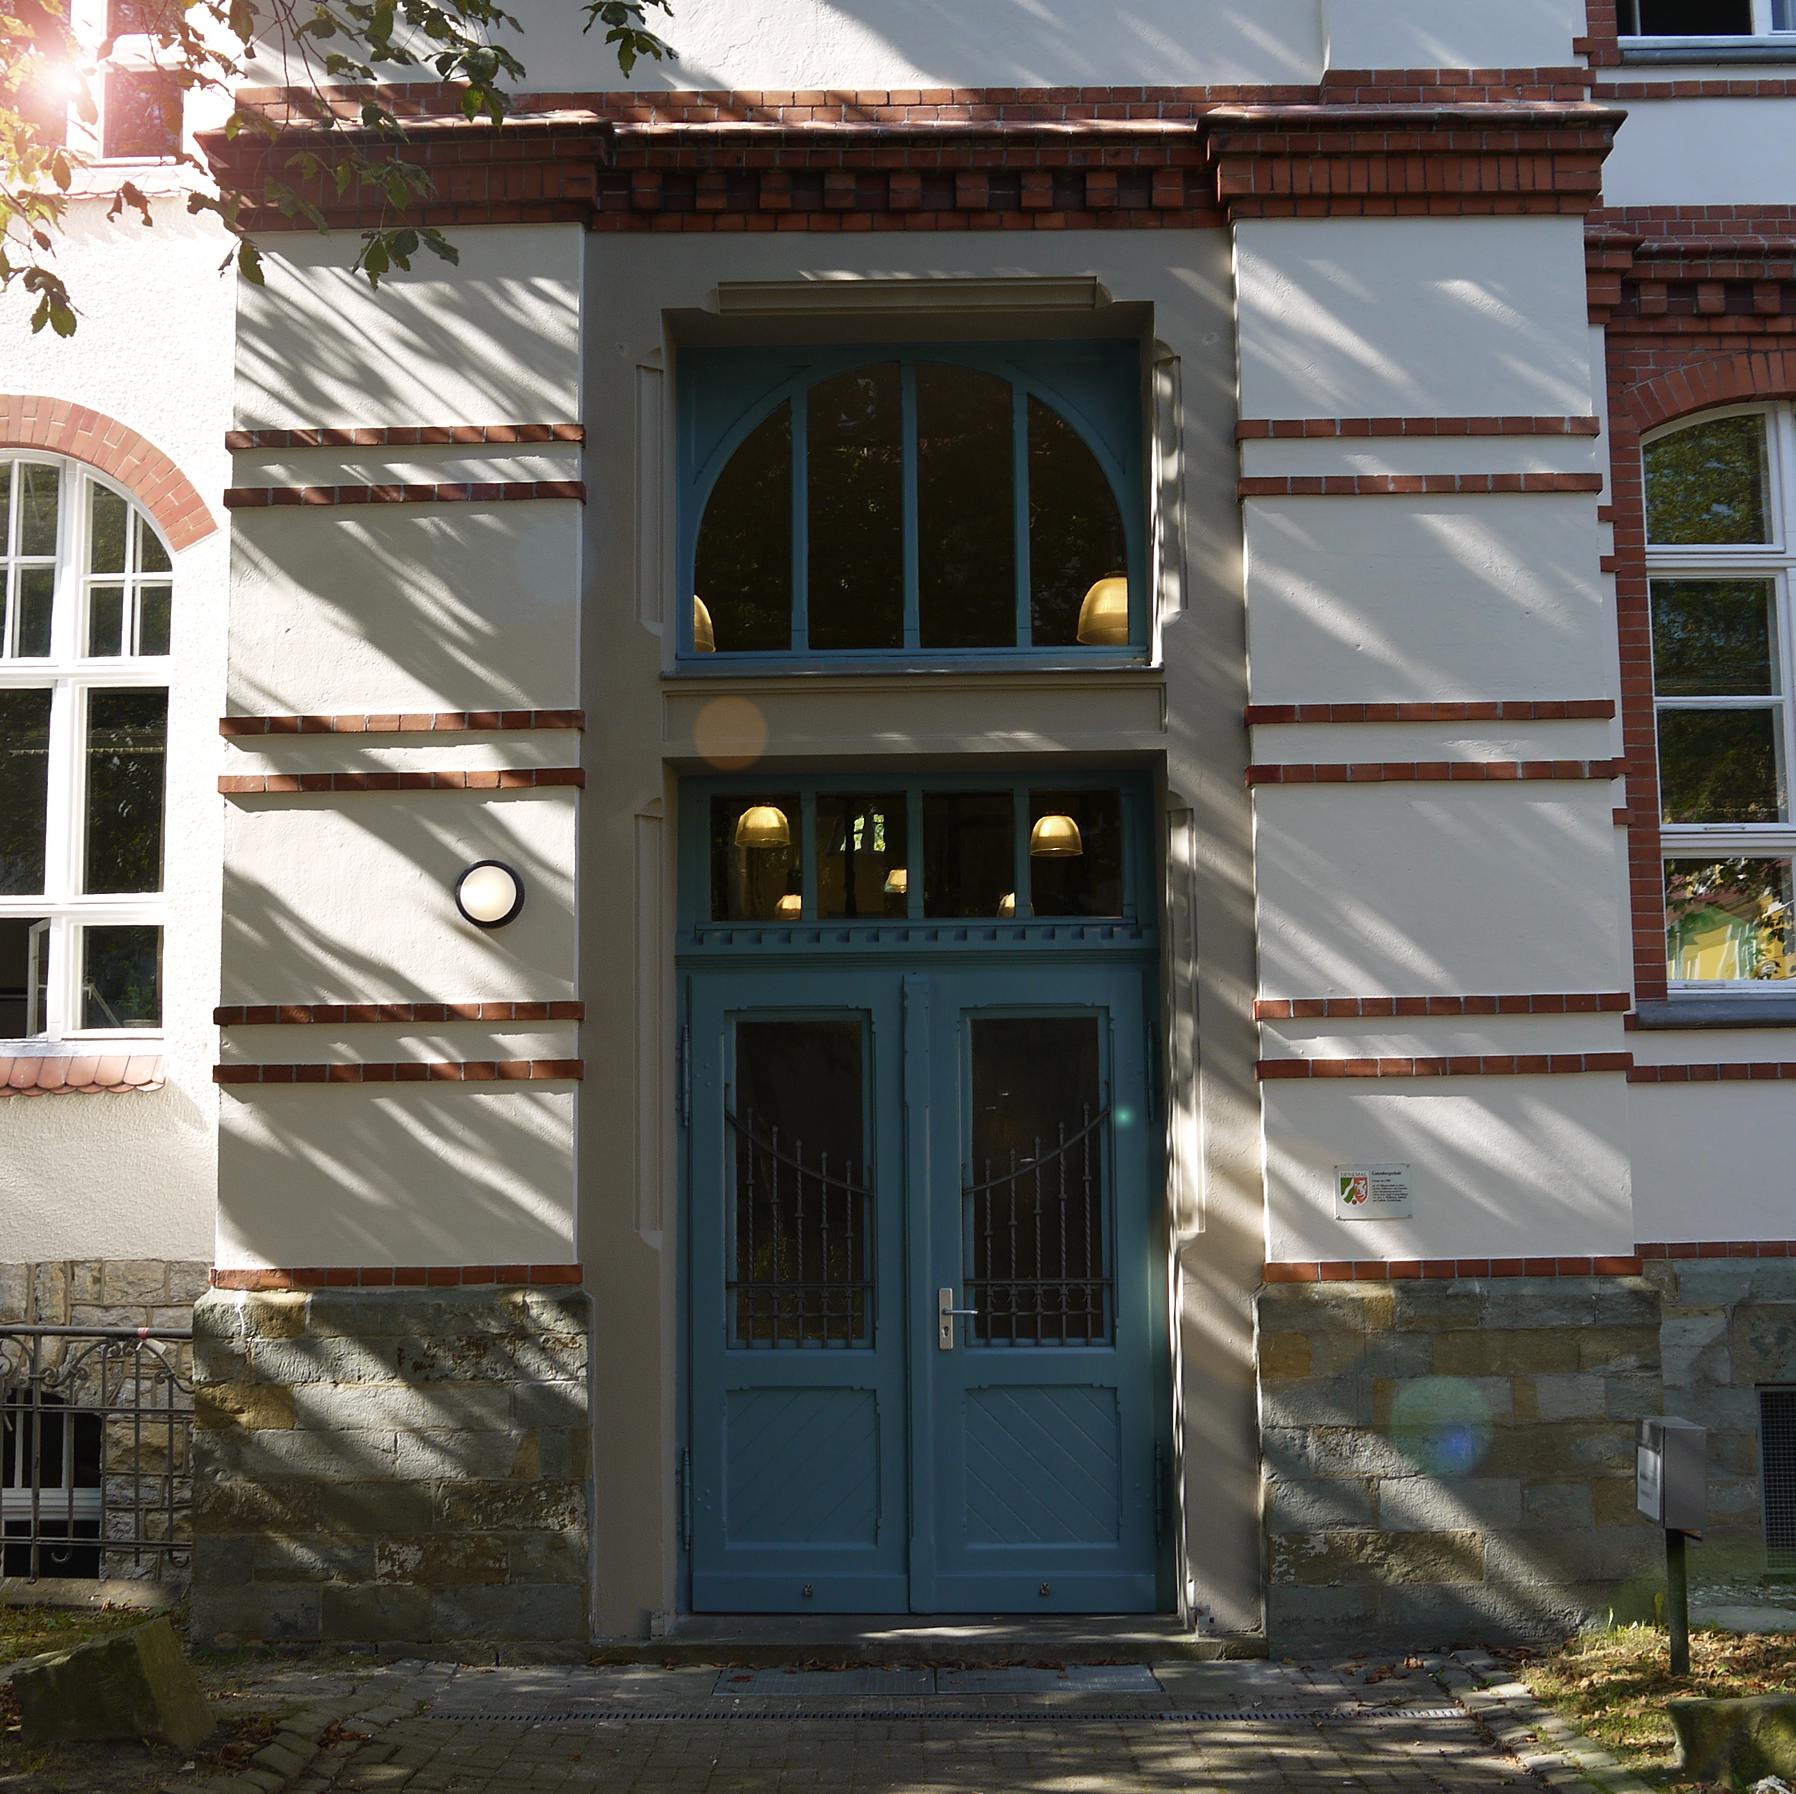 Gutenbergschule . Bielefeld